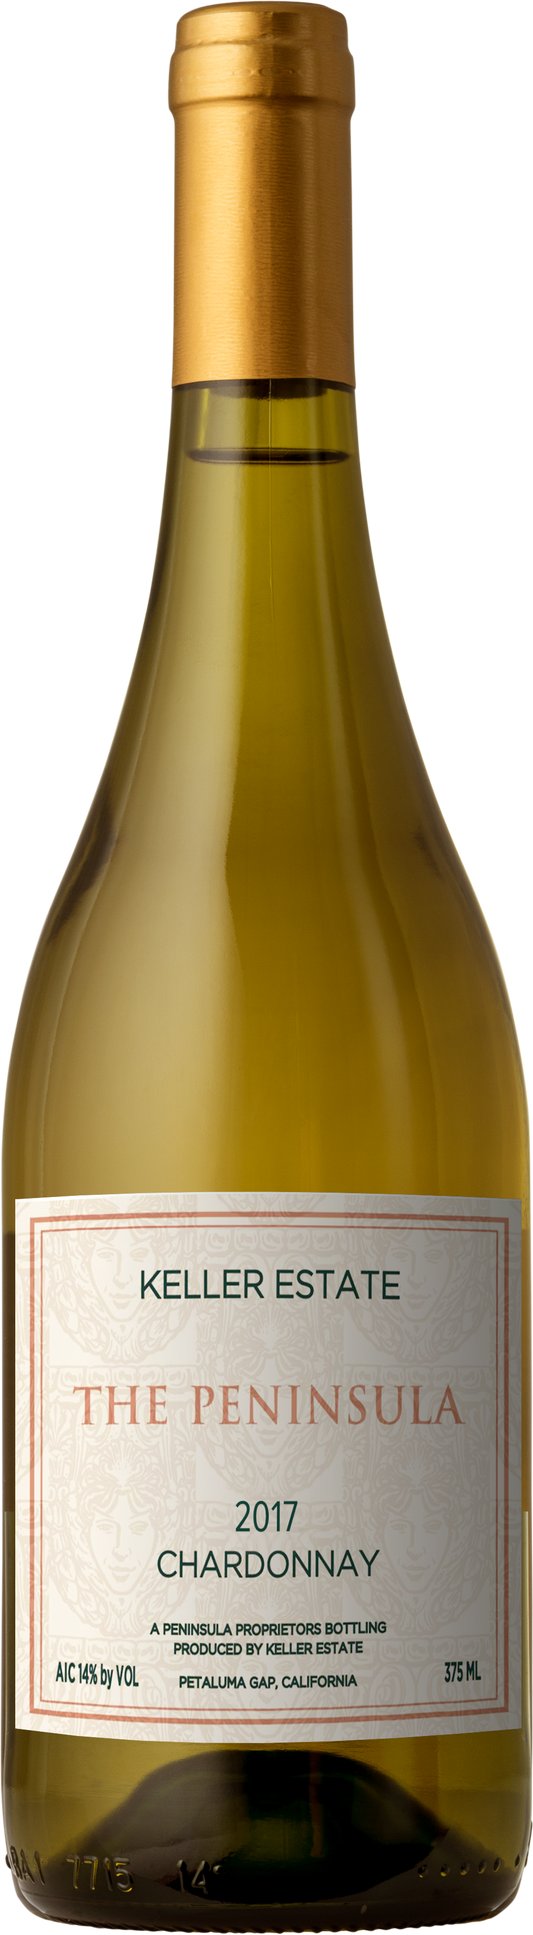 Keller Peninsula Chardonnay 2016